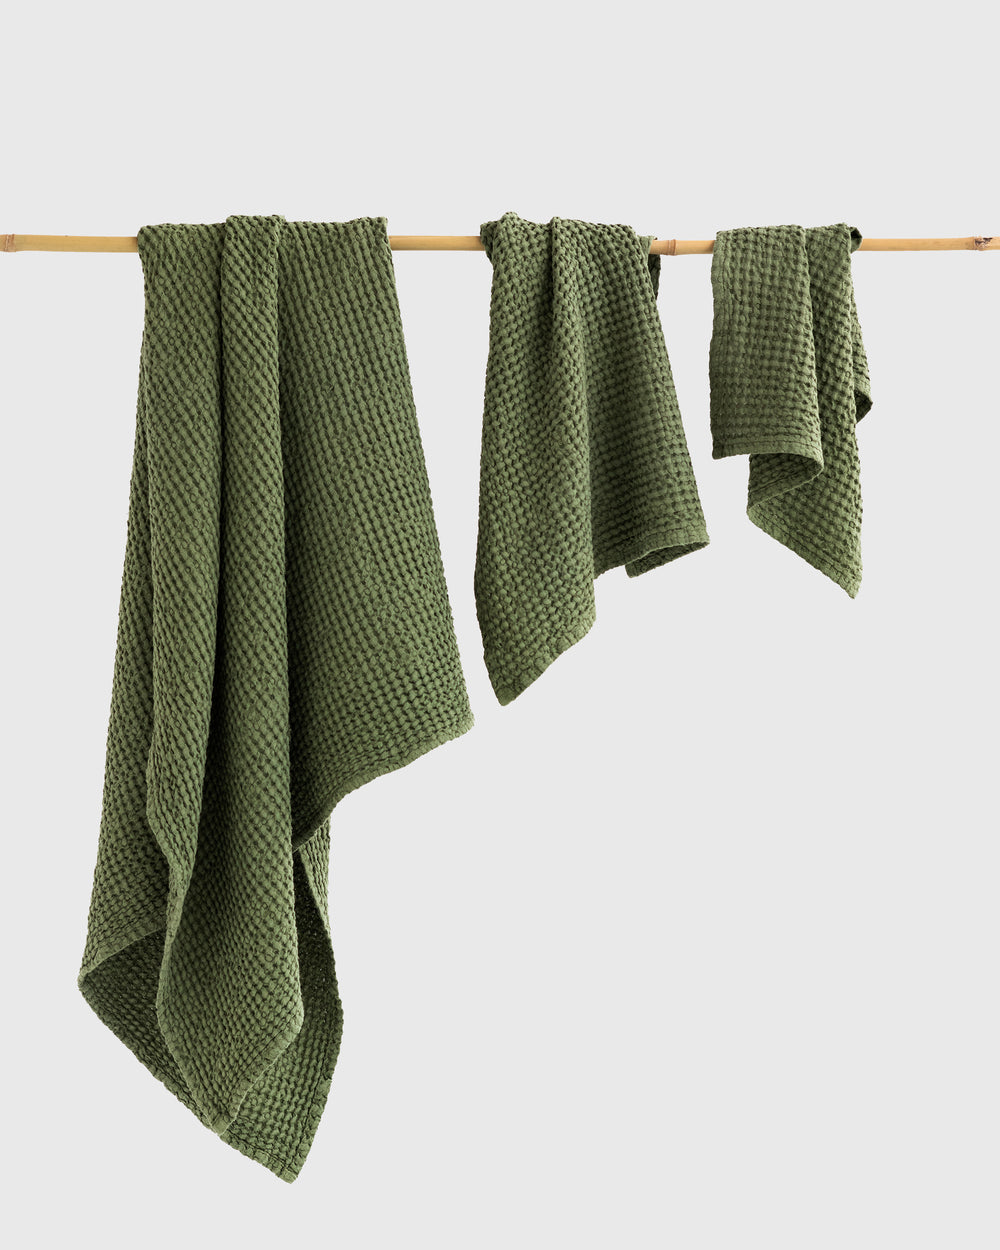 Linen Waffle Towels in Balsam Green: Towel Set, Bath Towel, Body Linen  Towels, Hand Towels, Wash Cloth. European Flax Linen, Super Absorbent 